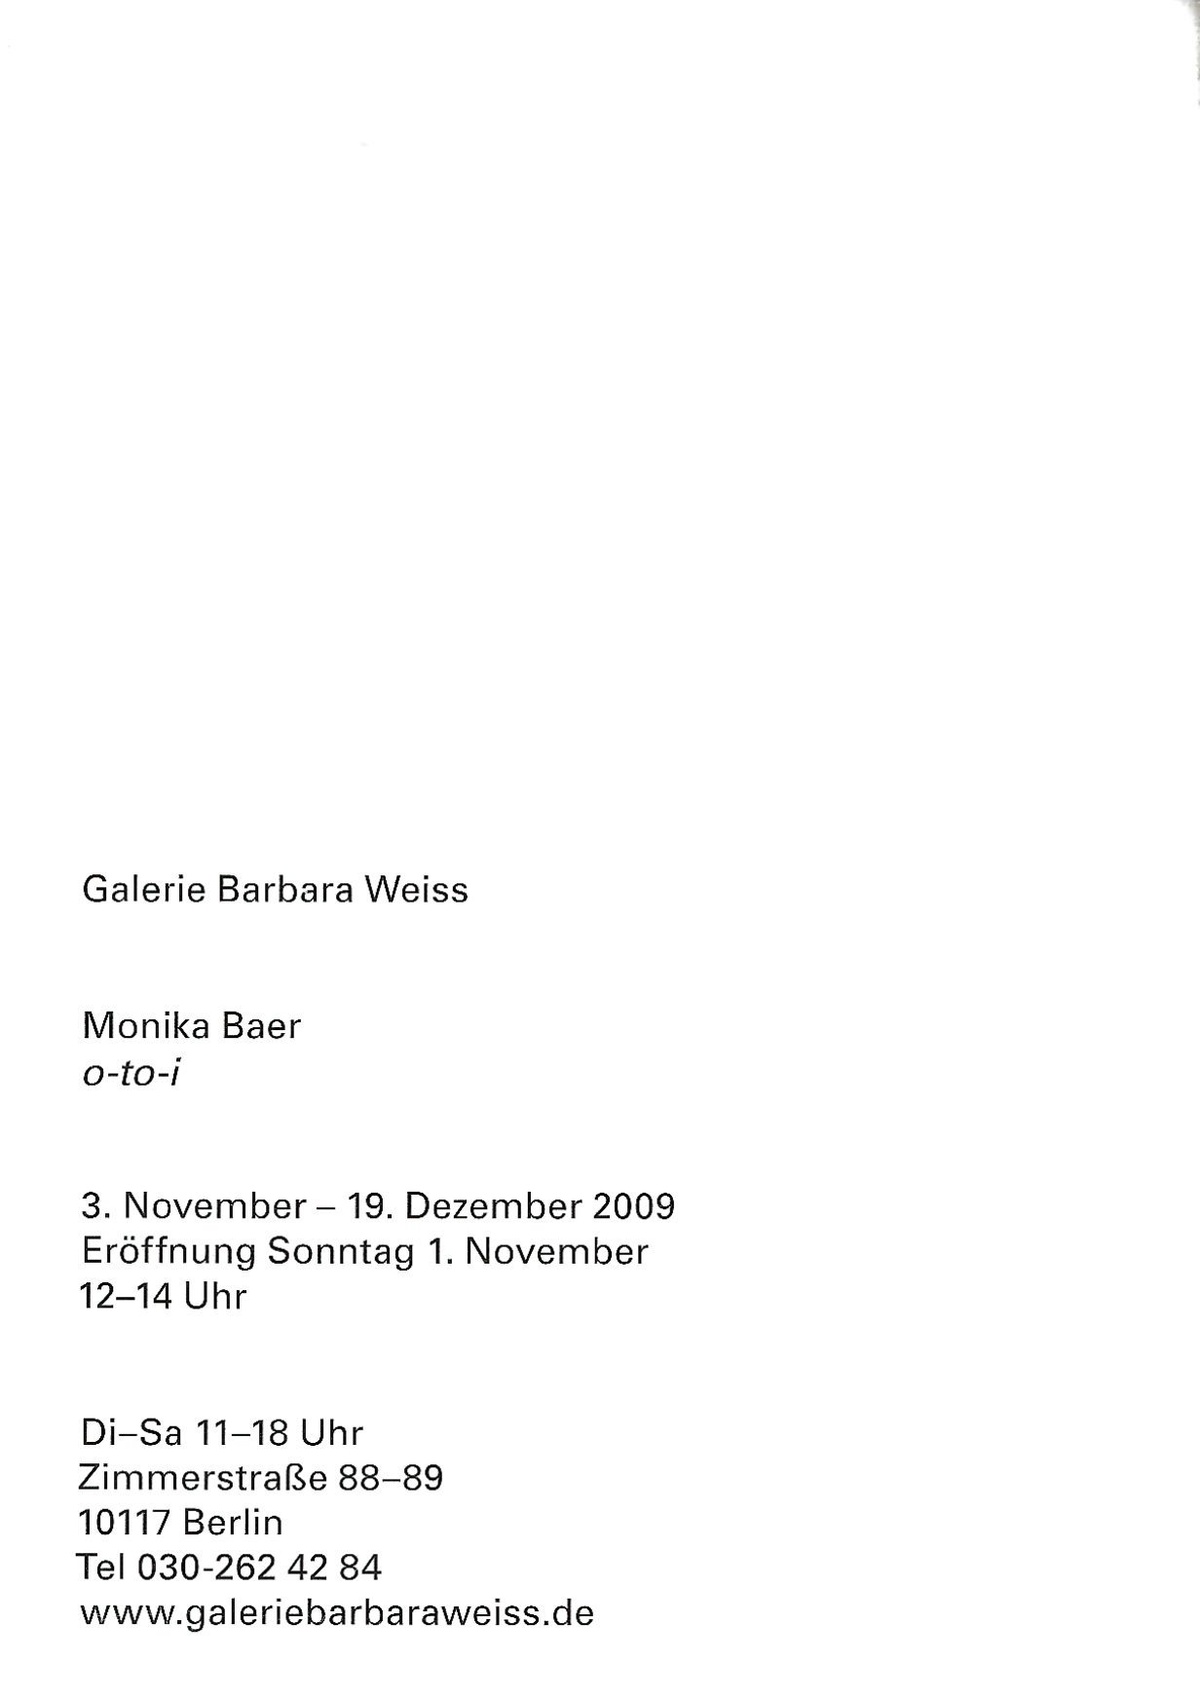 Monika Baer: o-to-i. November 3 – December 19, 2009